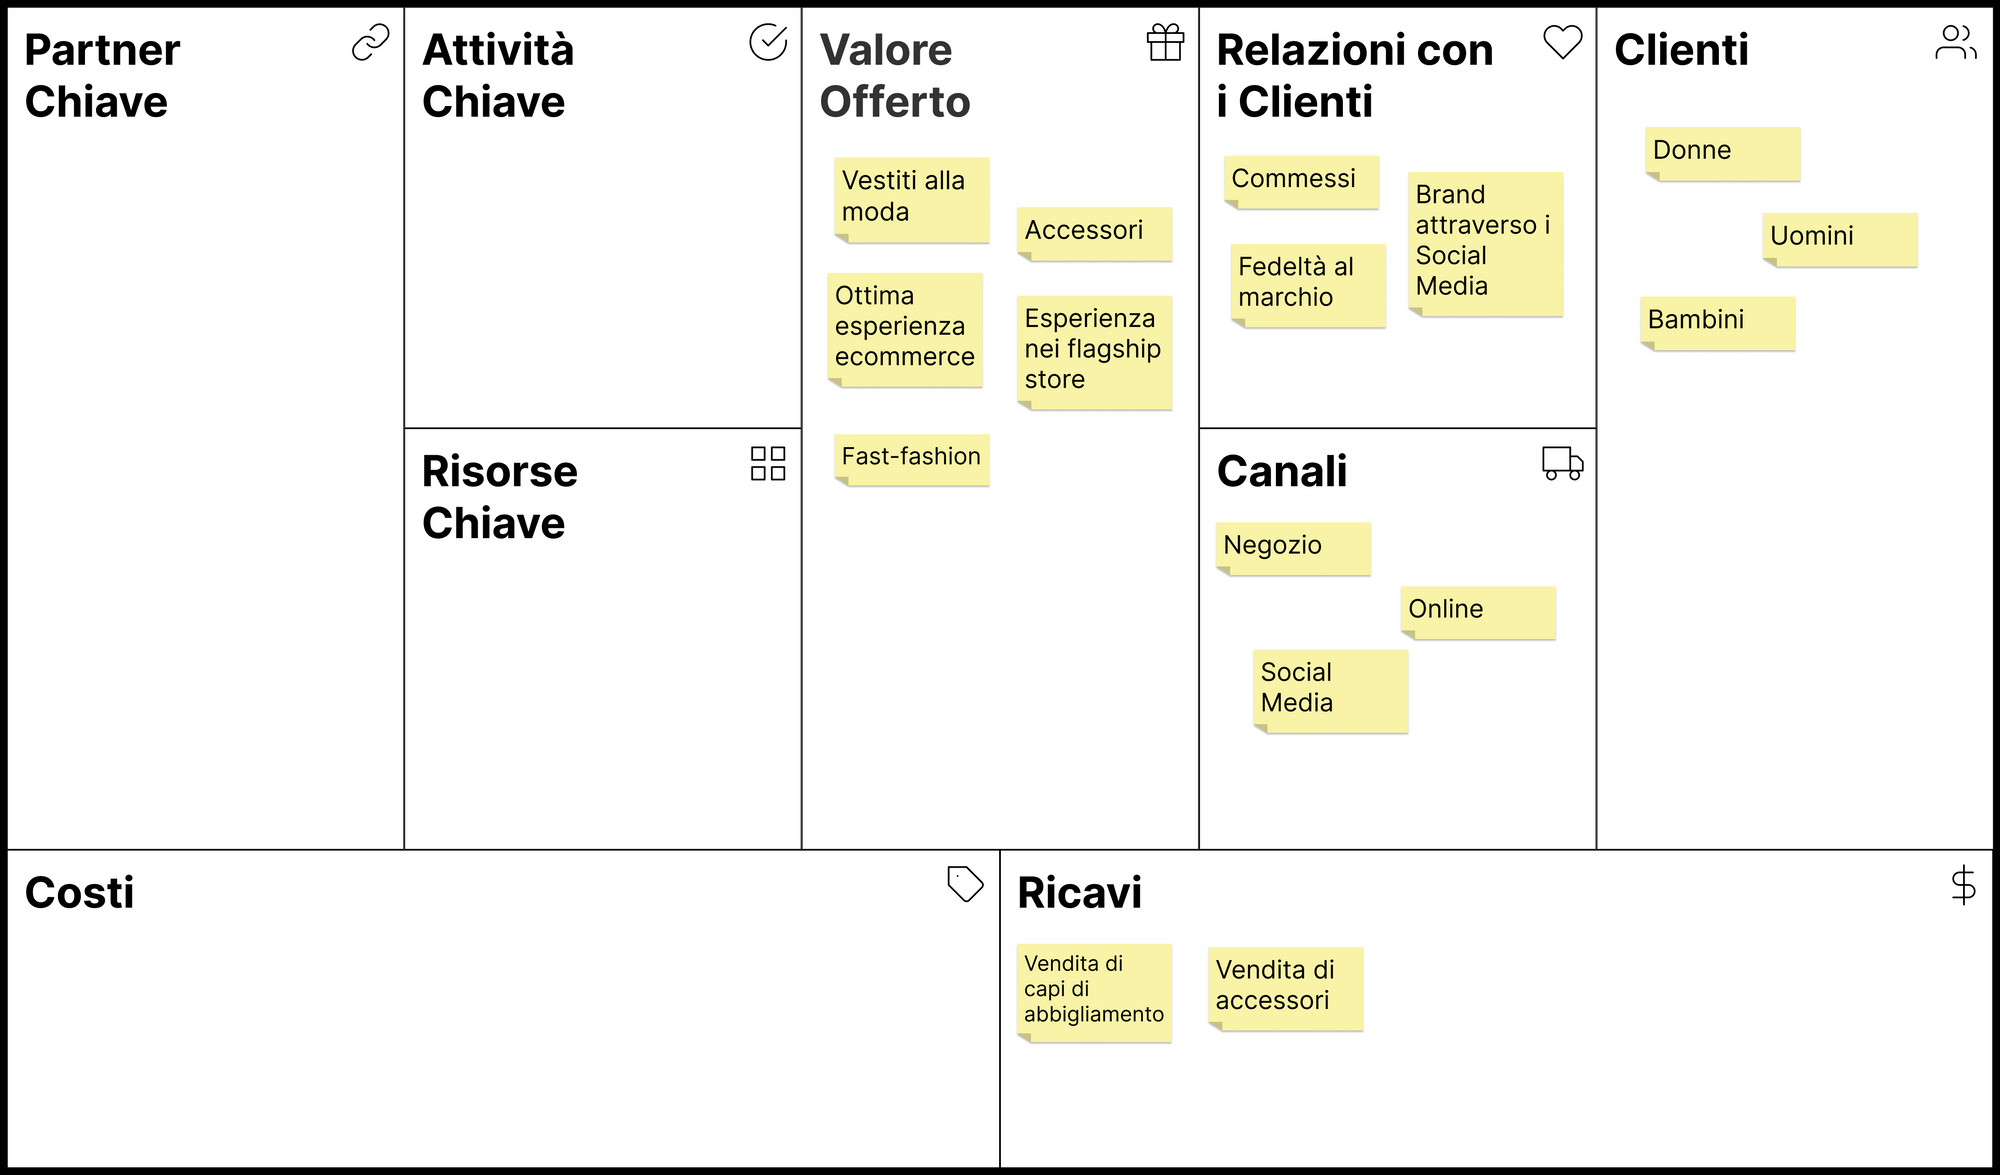 Business Model Canvas - Ricavi